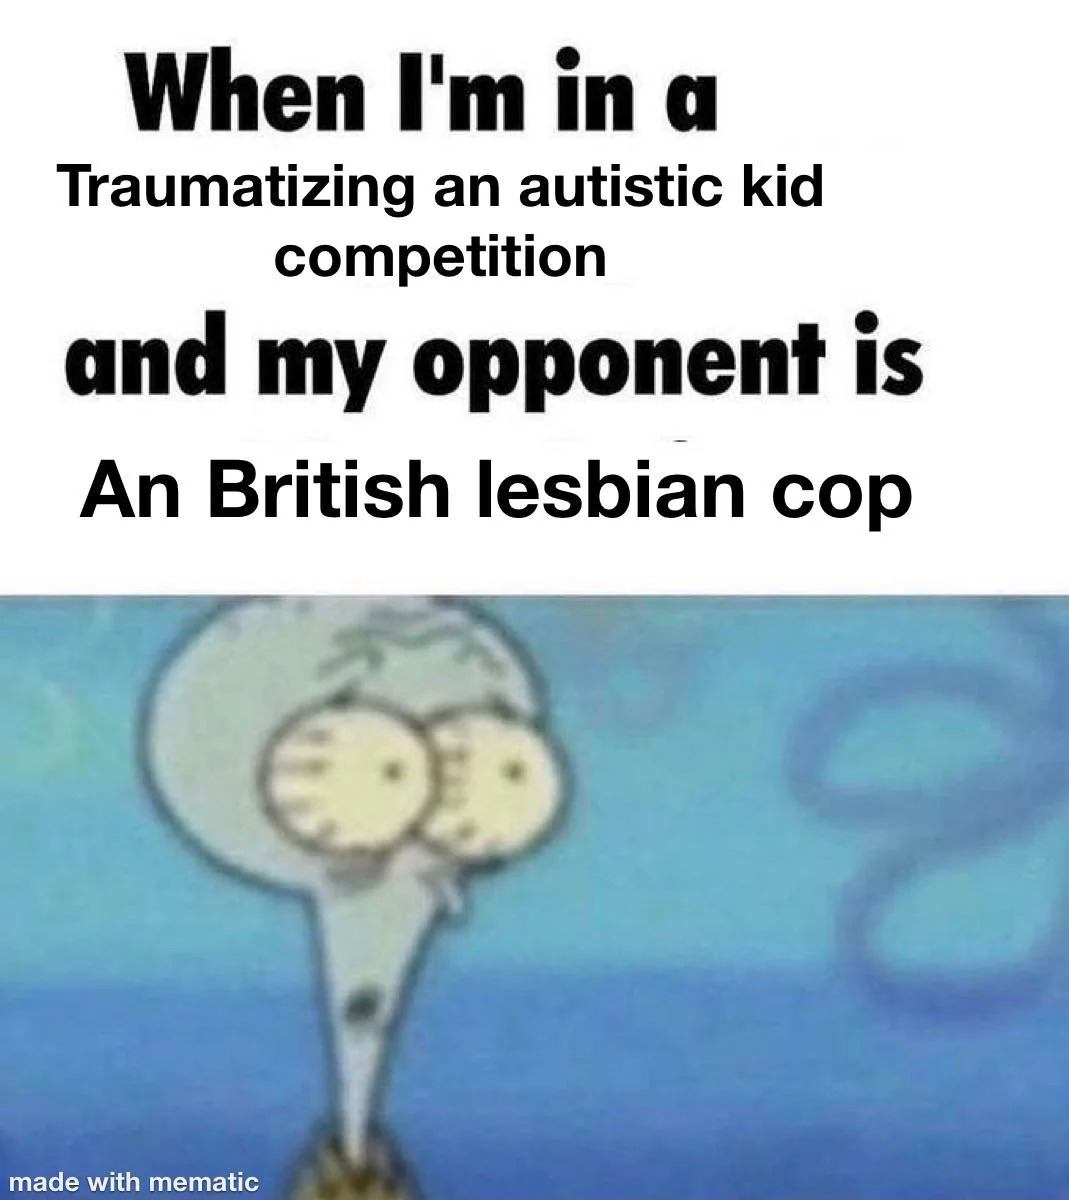 British lesbian cop - meme